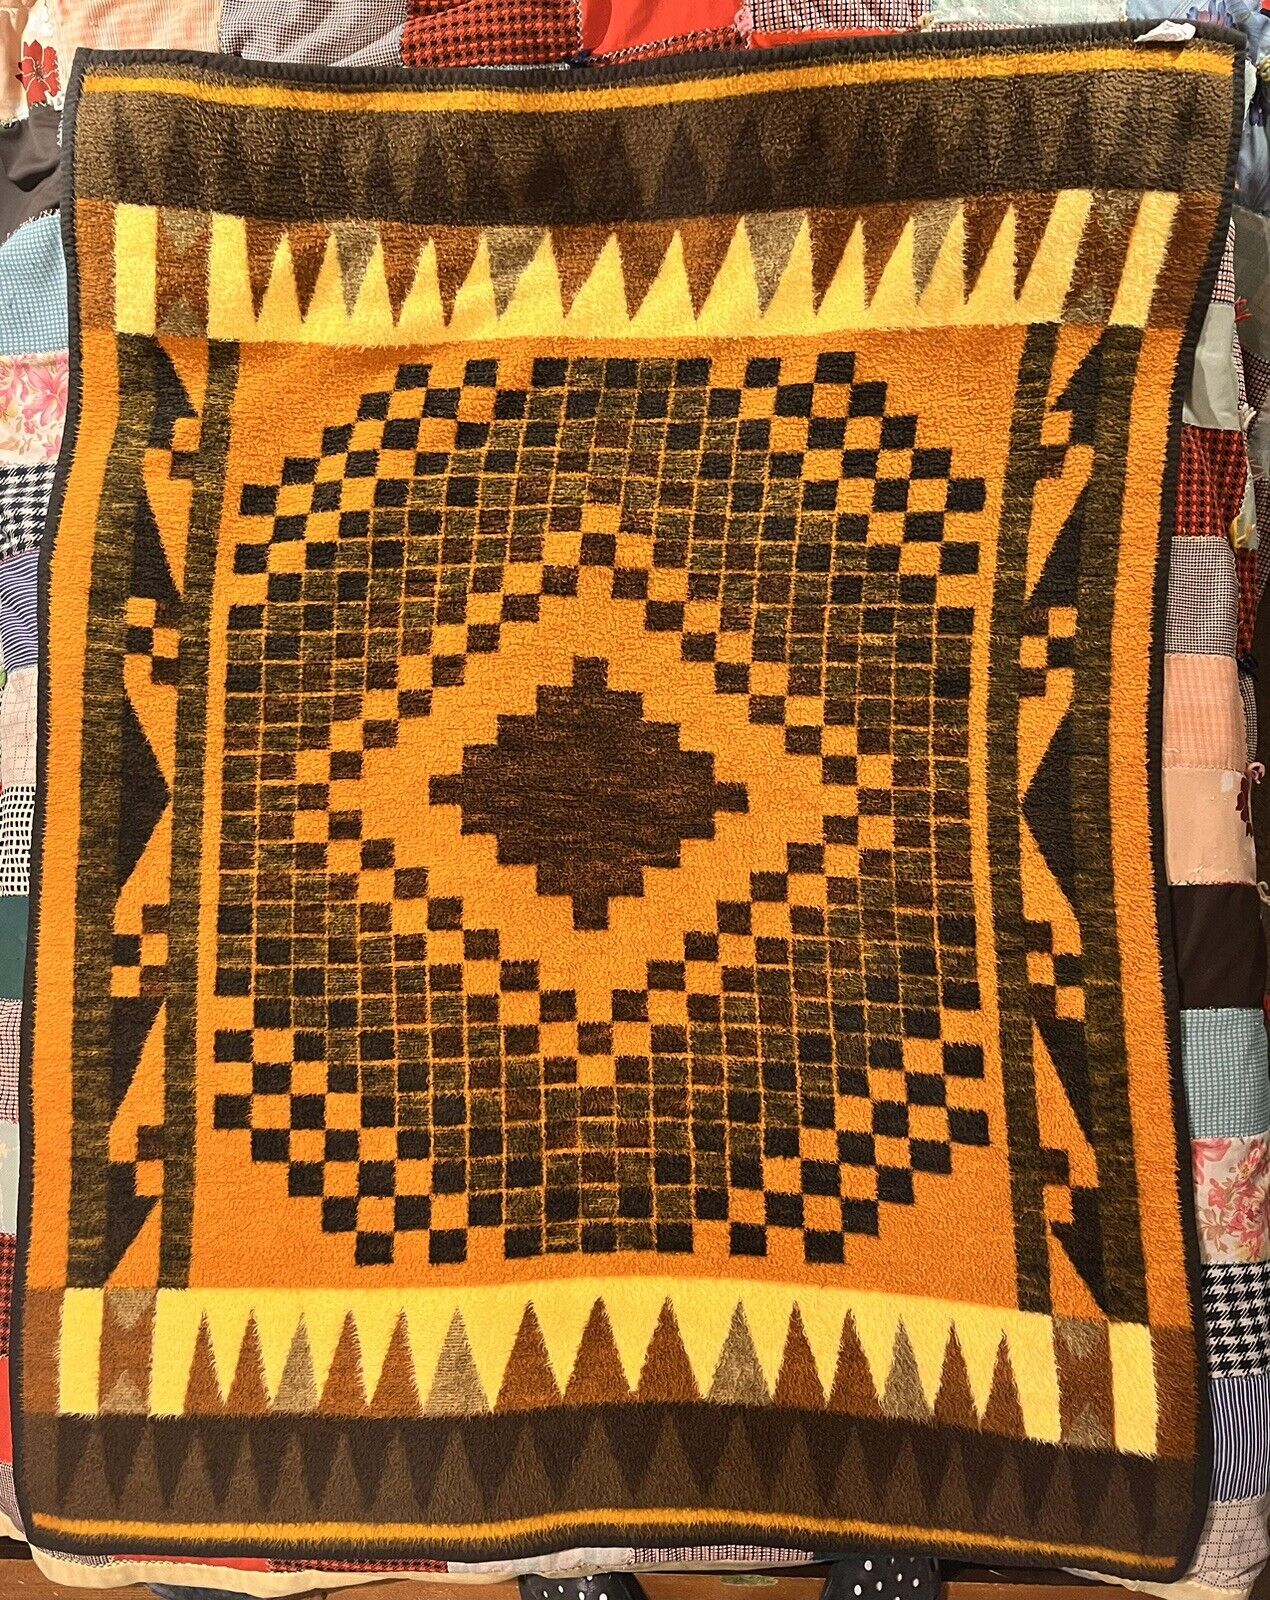 Vintage Biederlack Throw Blanket Aztec Native Southwest 54”x70